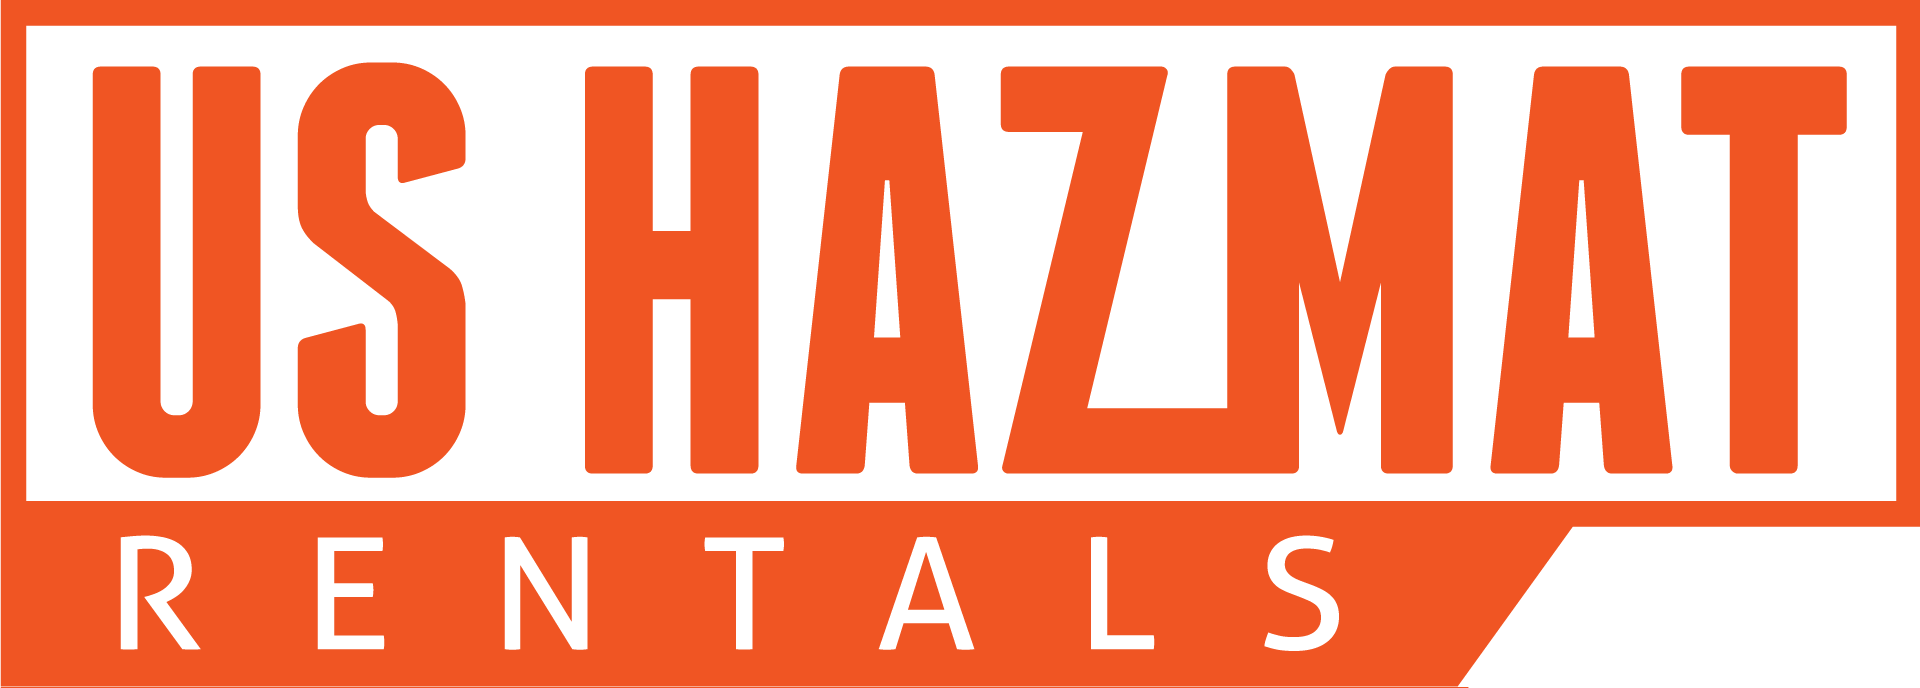 US Hazmat Rentals orange logo